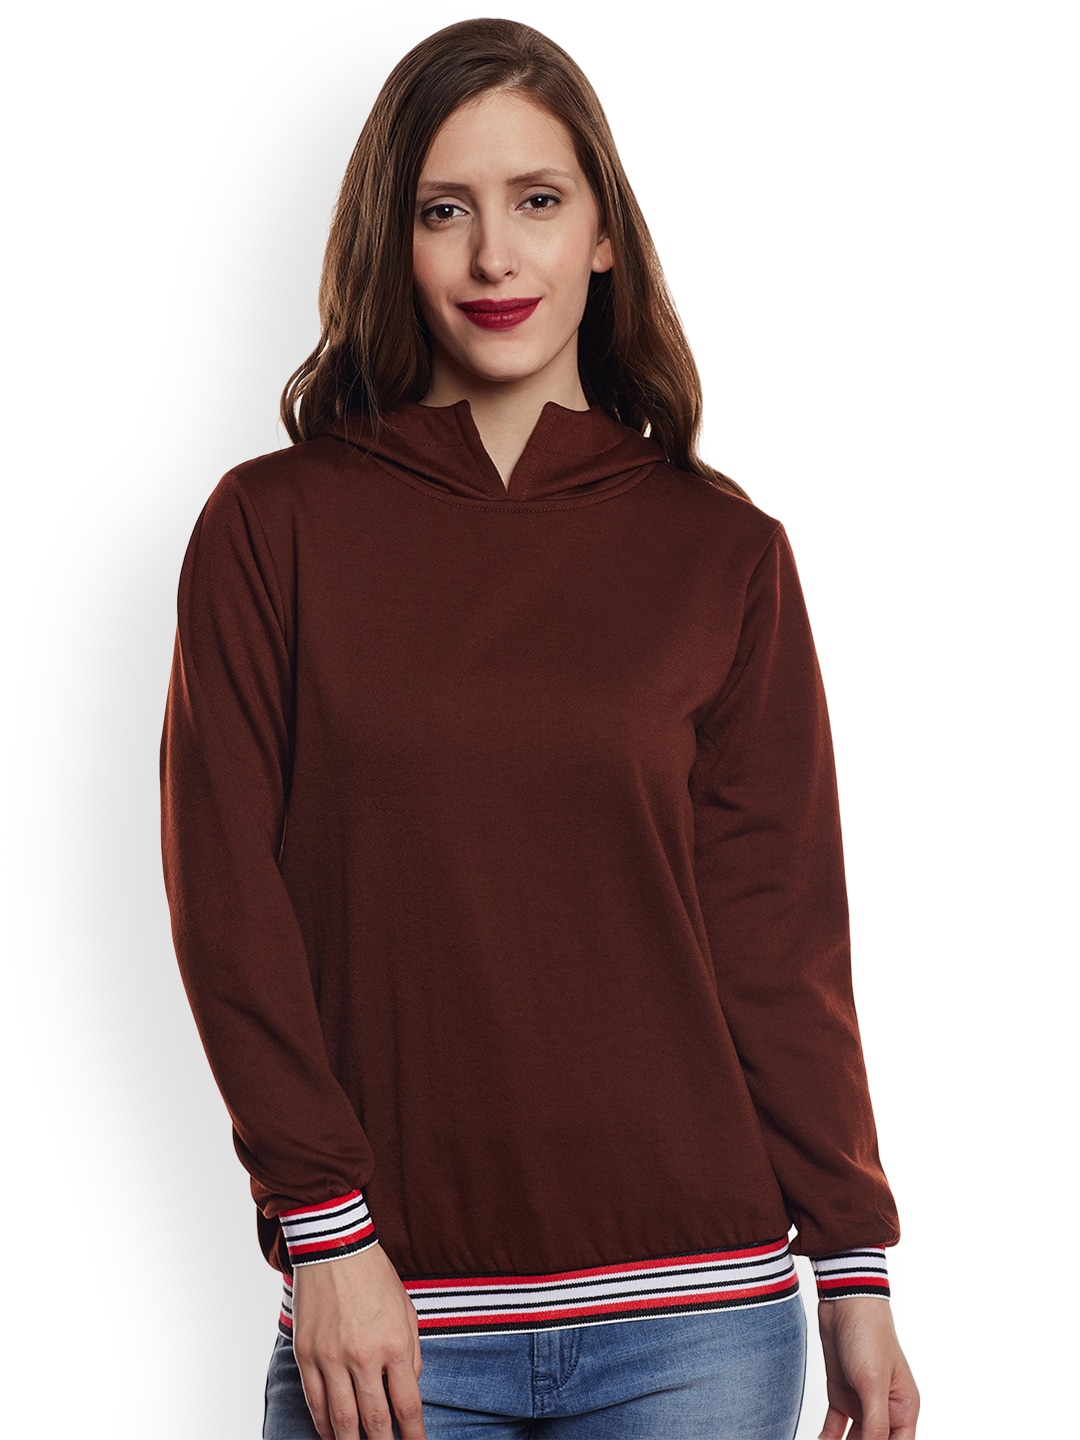 Belle Fille Women Brown Solid Hooded Sweatshirt Price in India